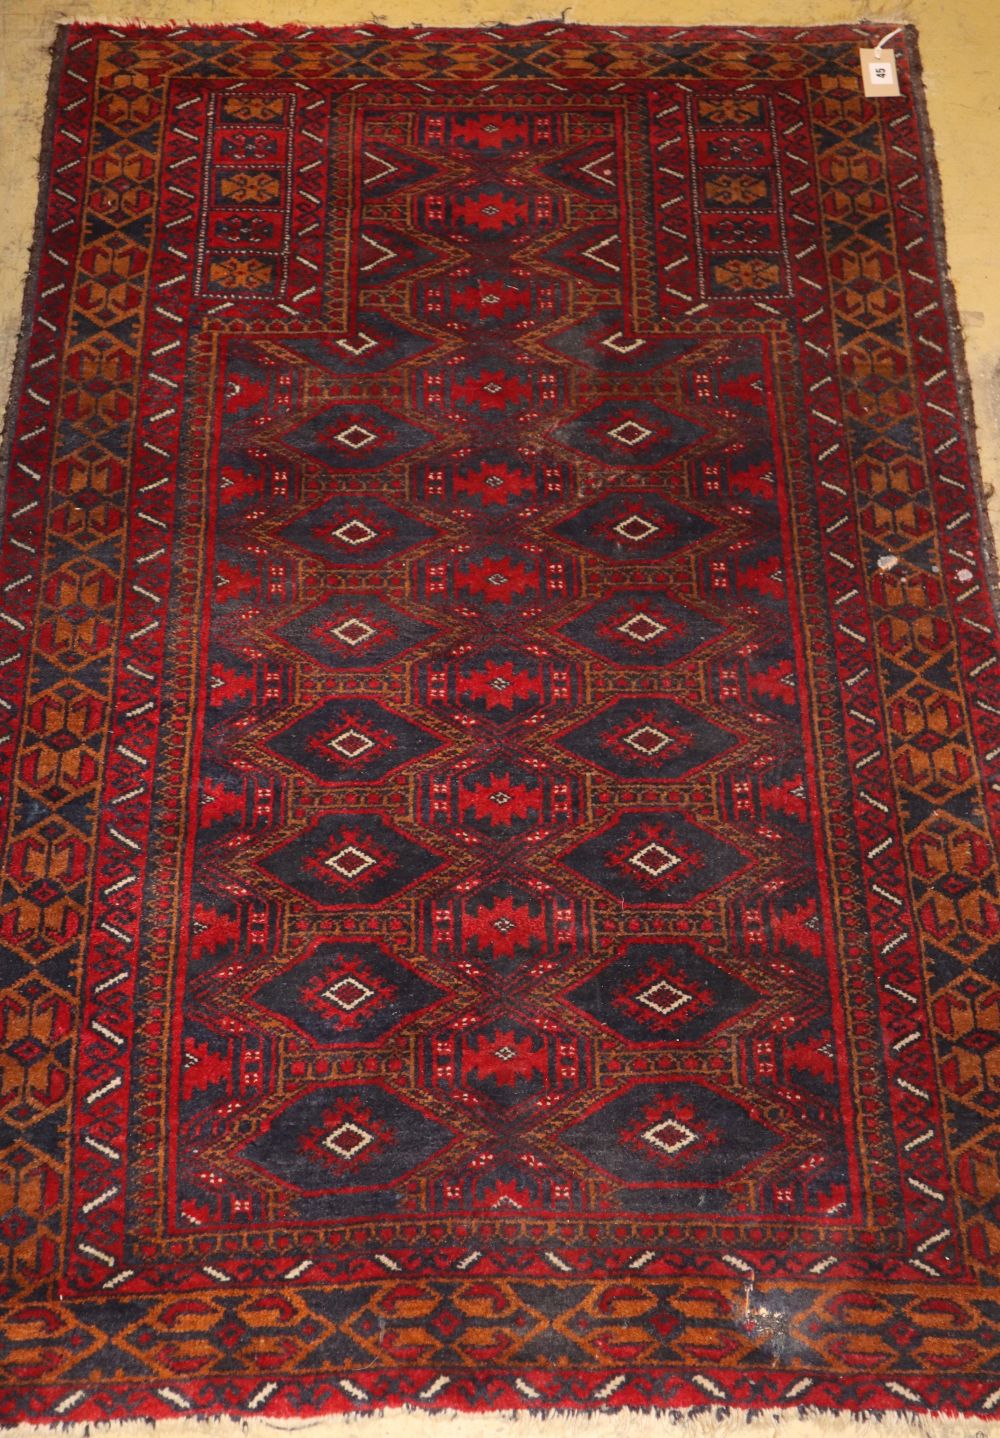 A Belouch prayer rug, 140 x 90cm